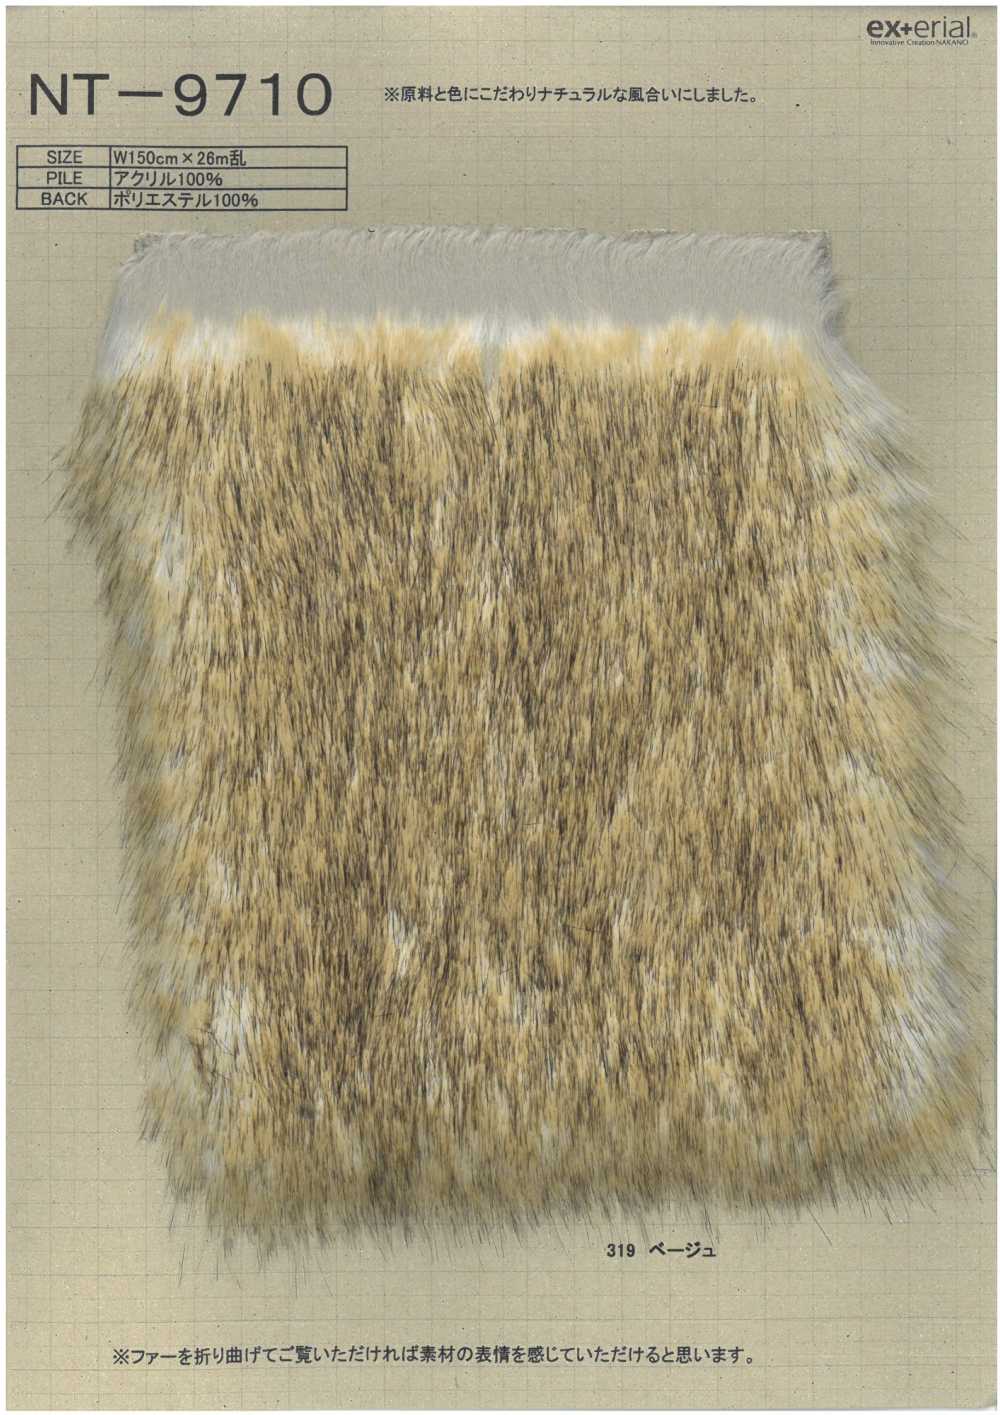 NT-9710 Bastelpelz [Fuzzy Lop][Textilgewebe] Nakano-Strümpfe-Industrie